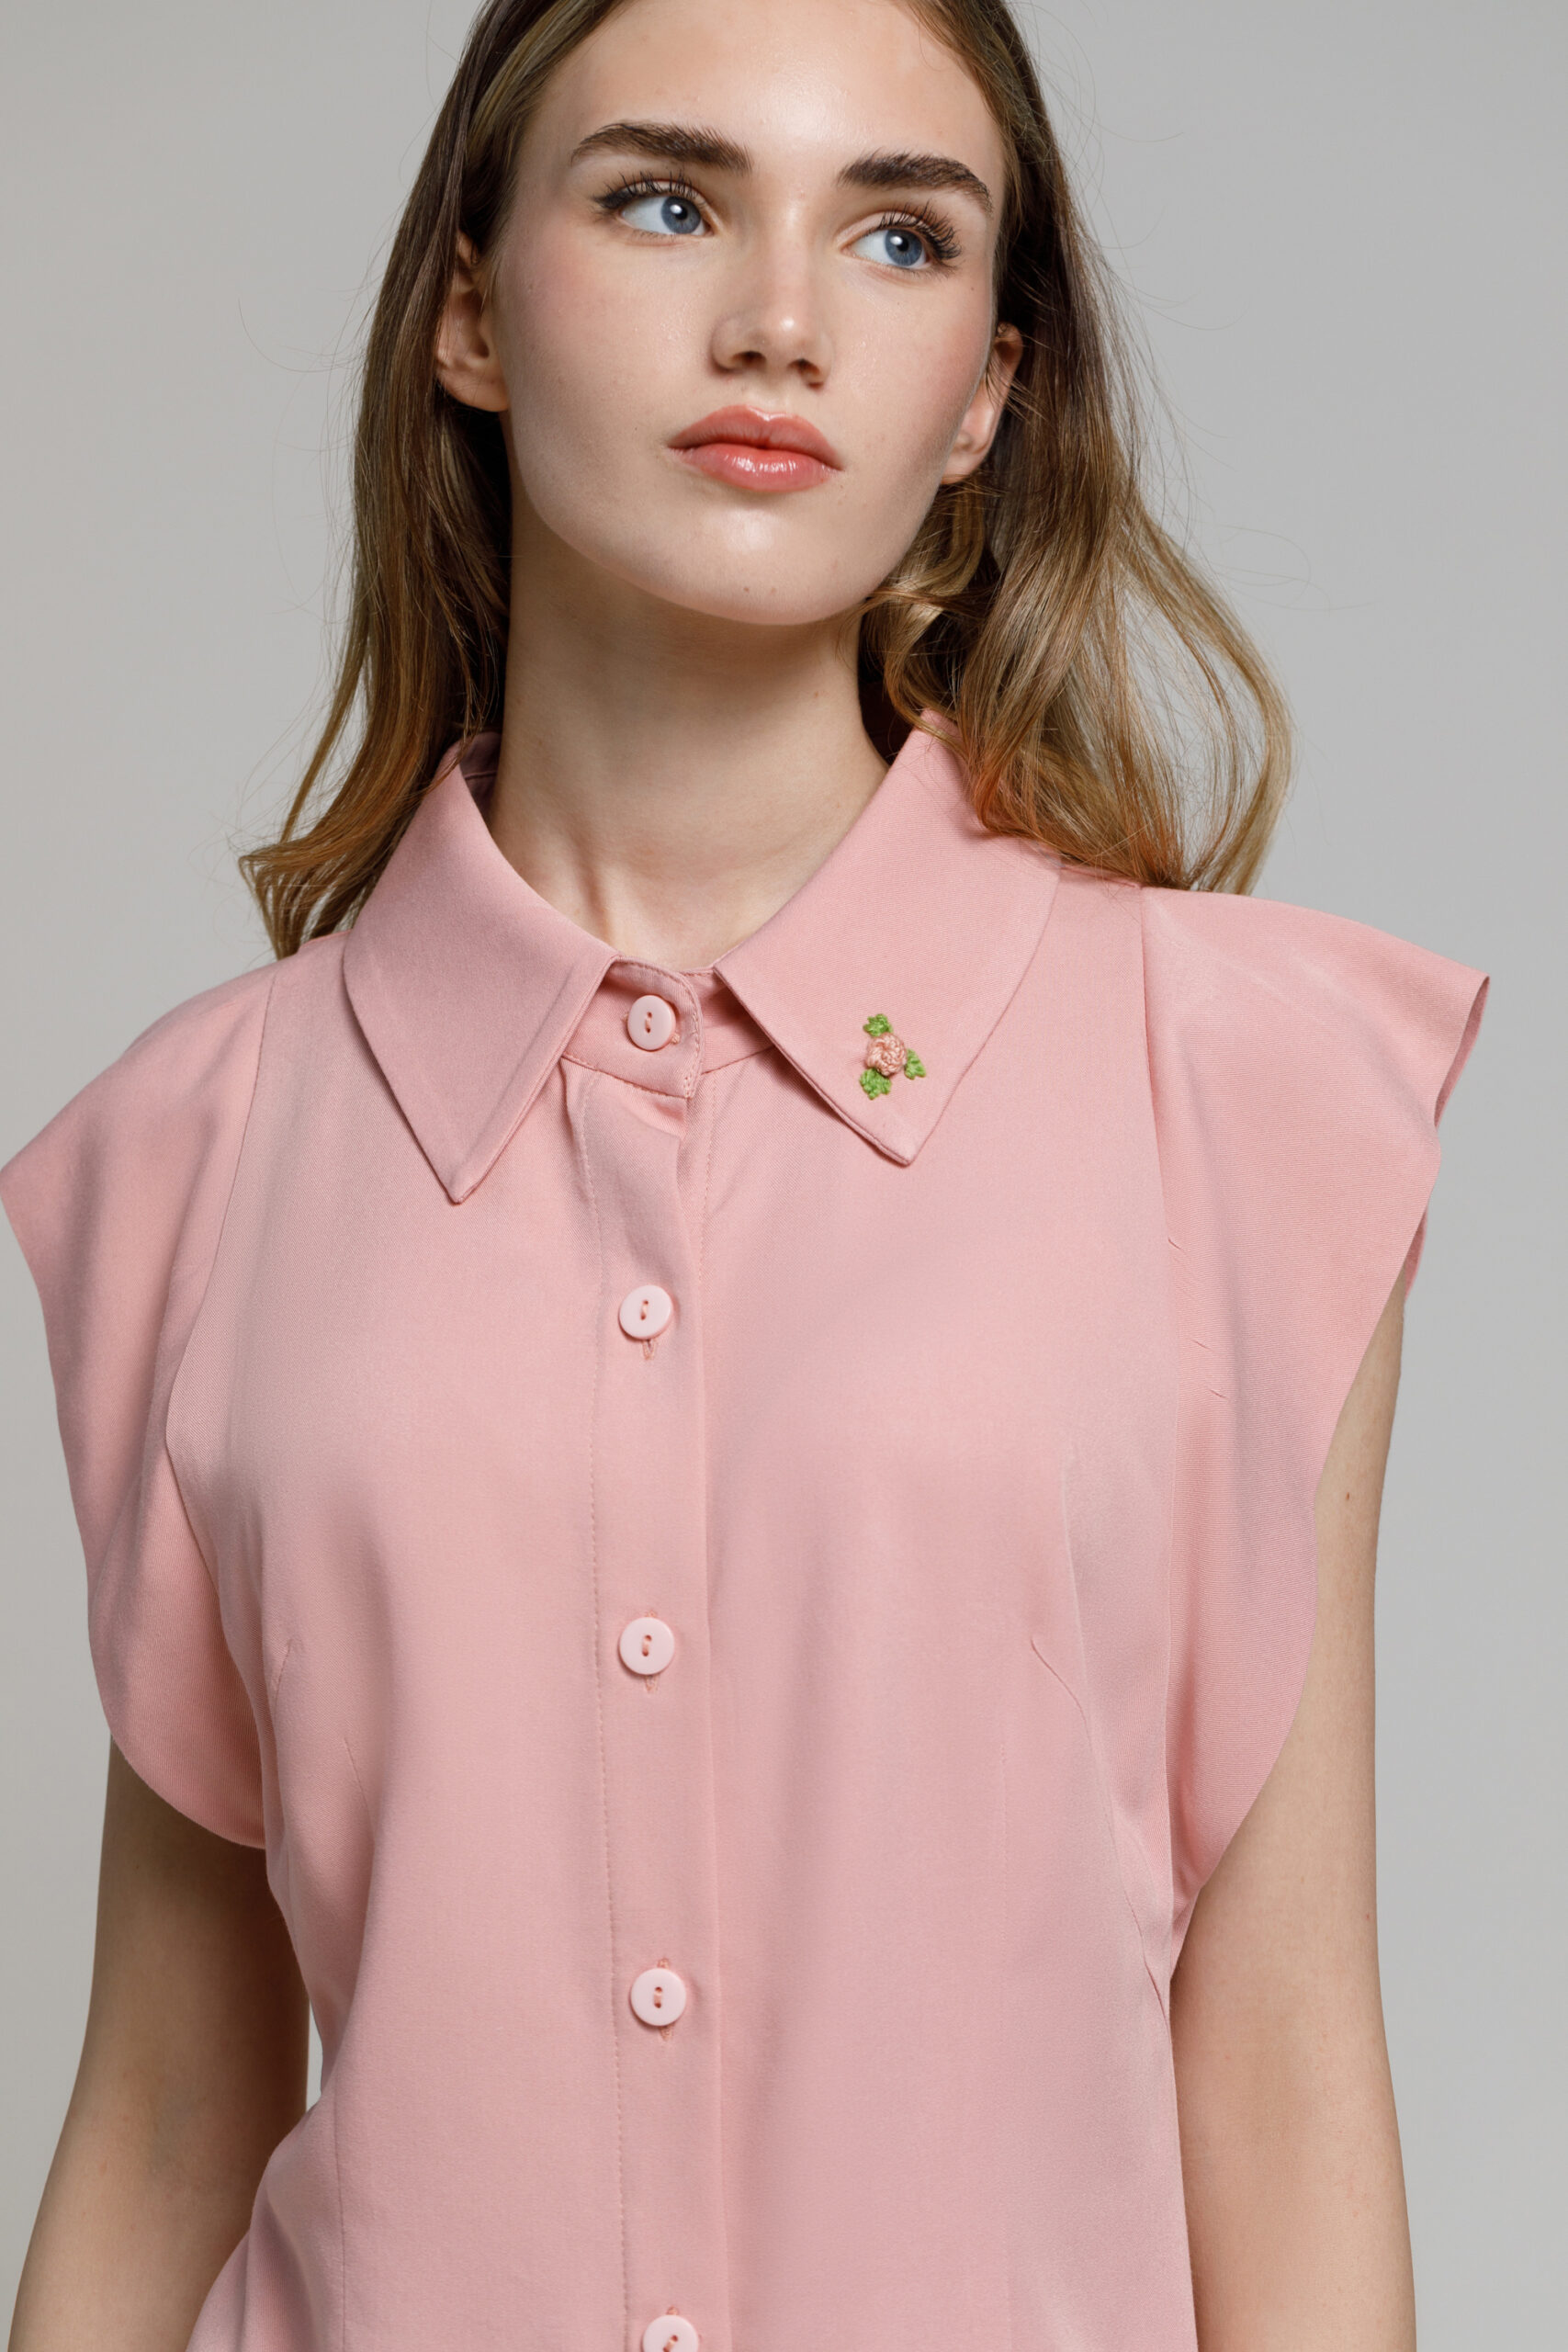 OPAL pink viscose shirt. Natural fabrics, original design, handmade embroidery